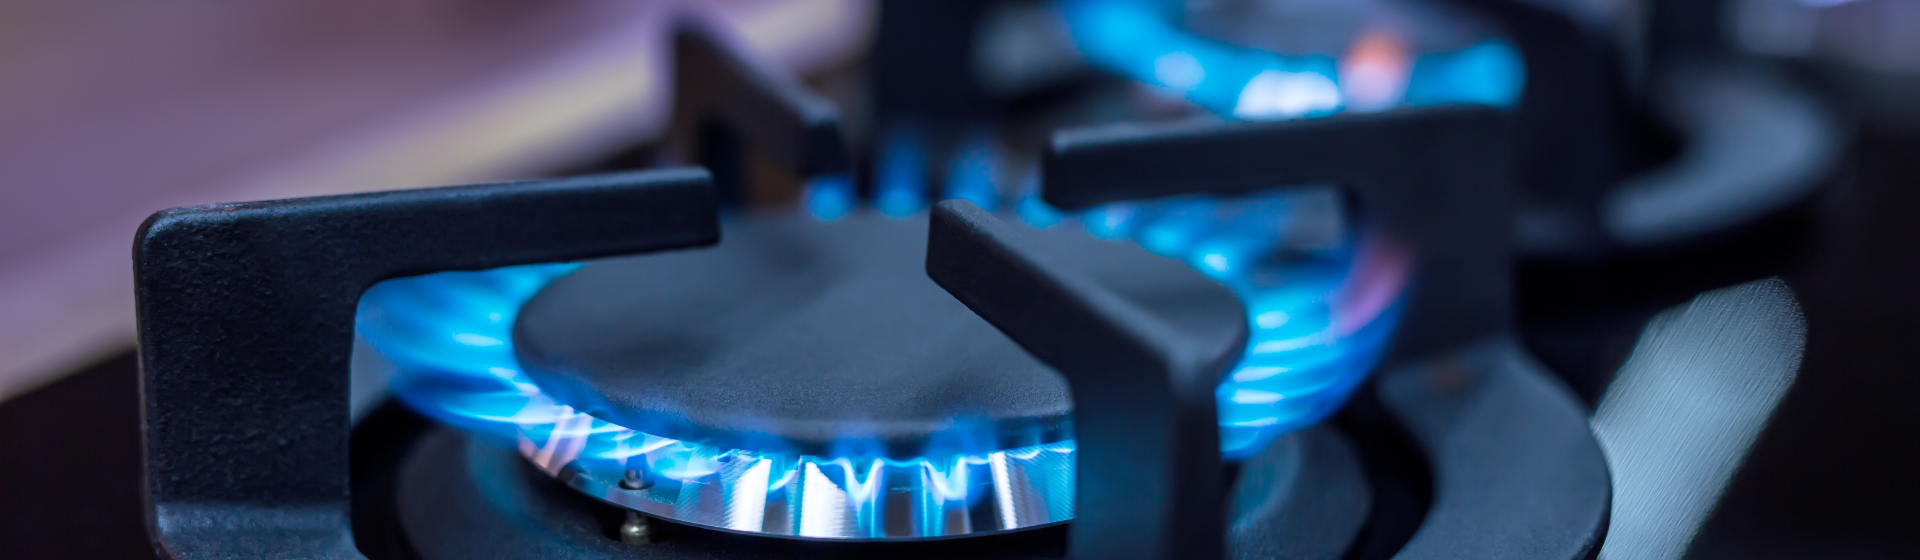 natural gas stove burner blue flame